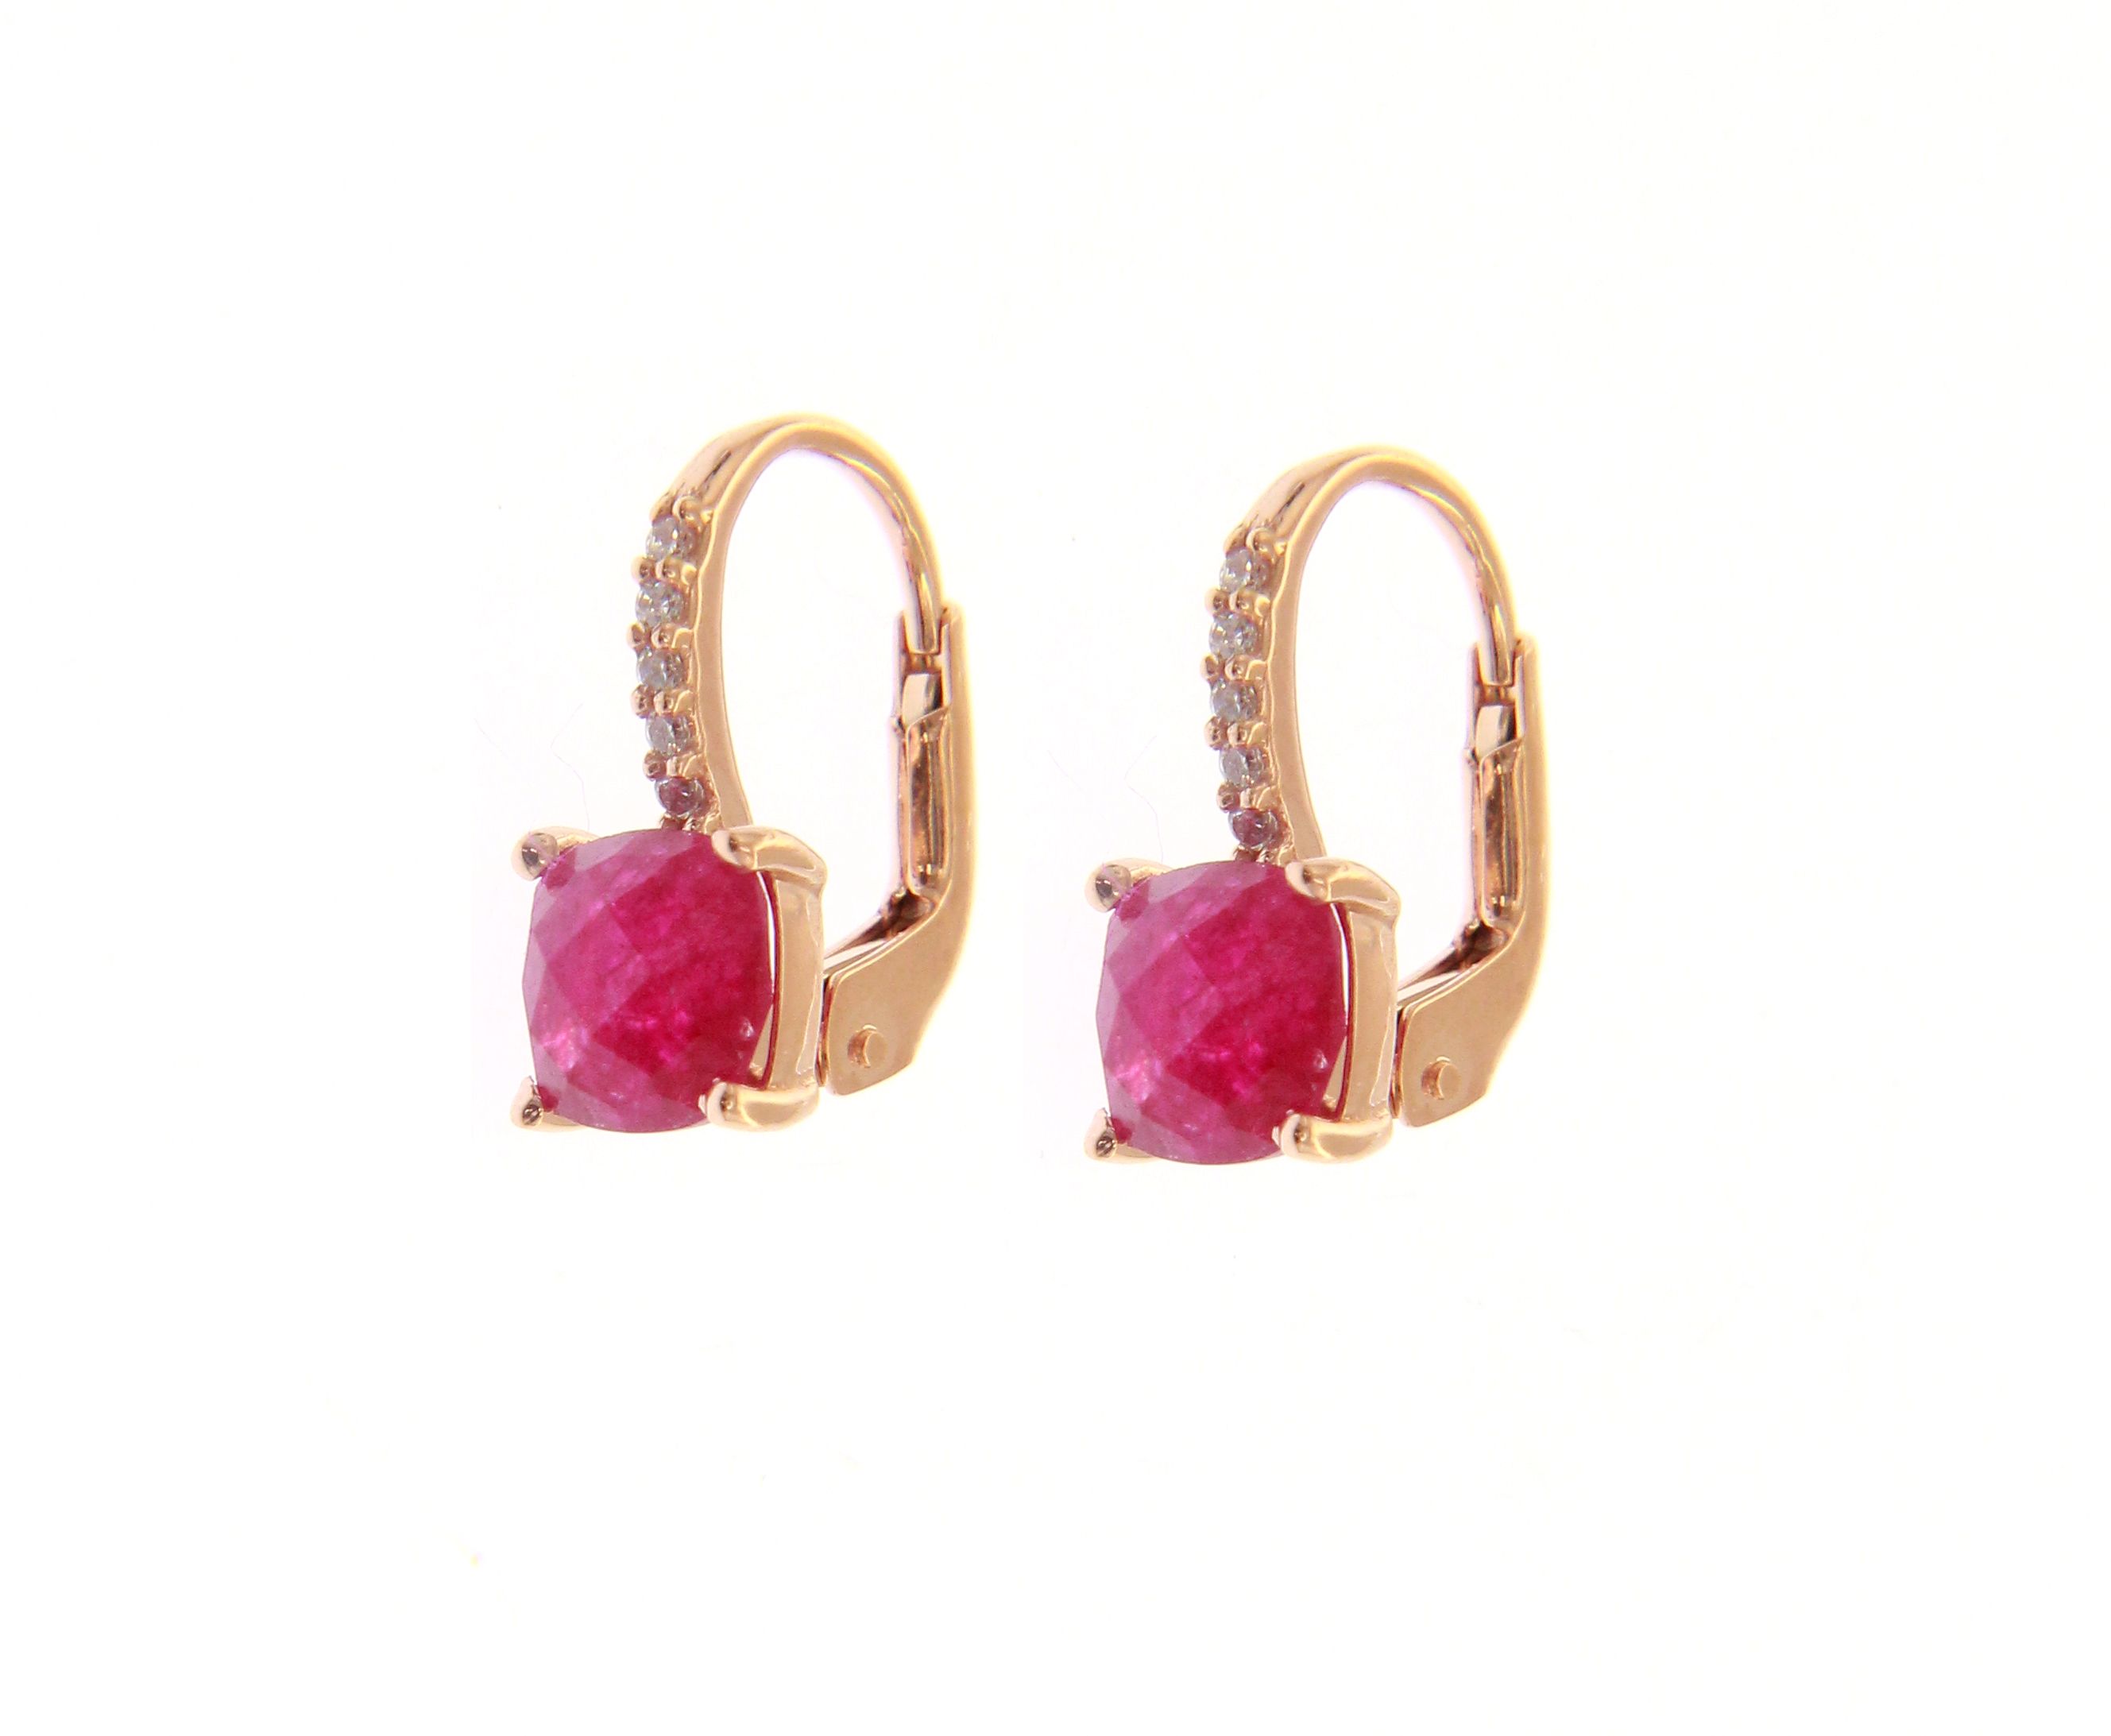 pendientes mujer oro rubies - aretes mujer piedras rojas - gold earrings to buy online - joyeria marga mira